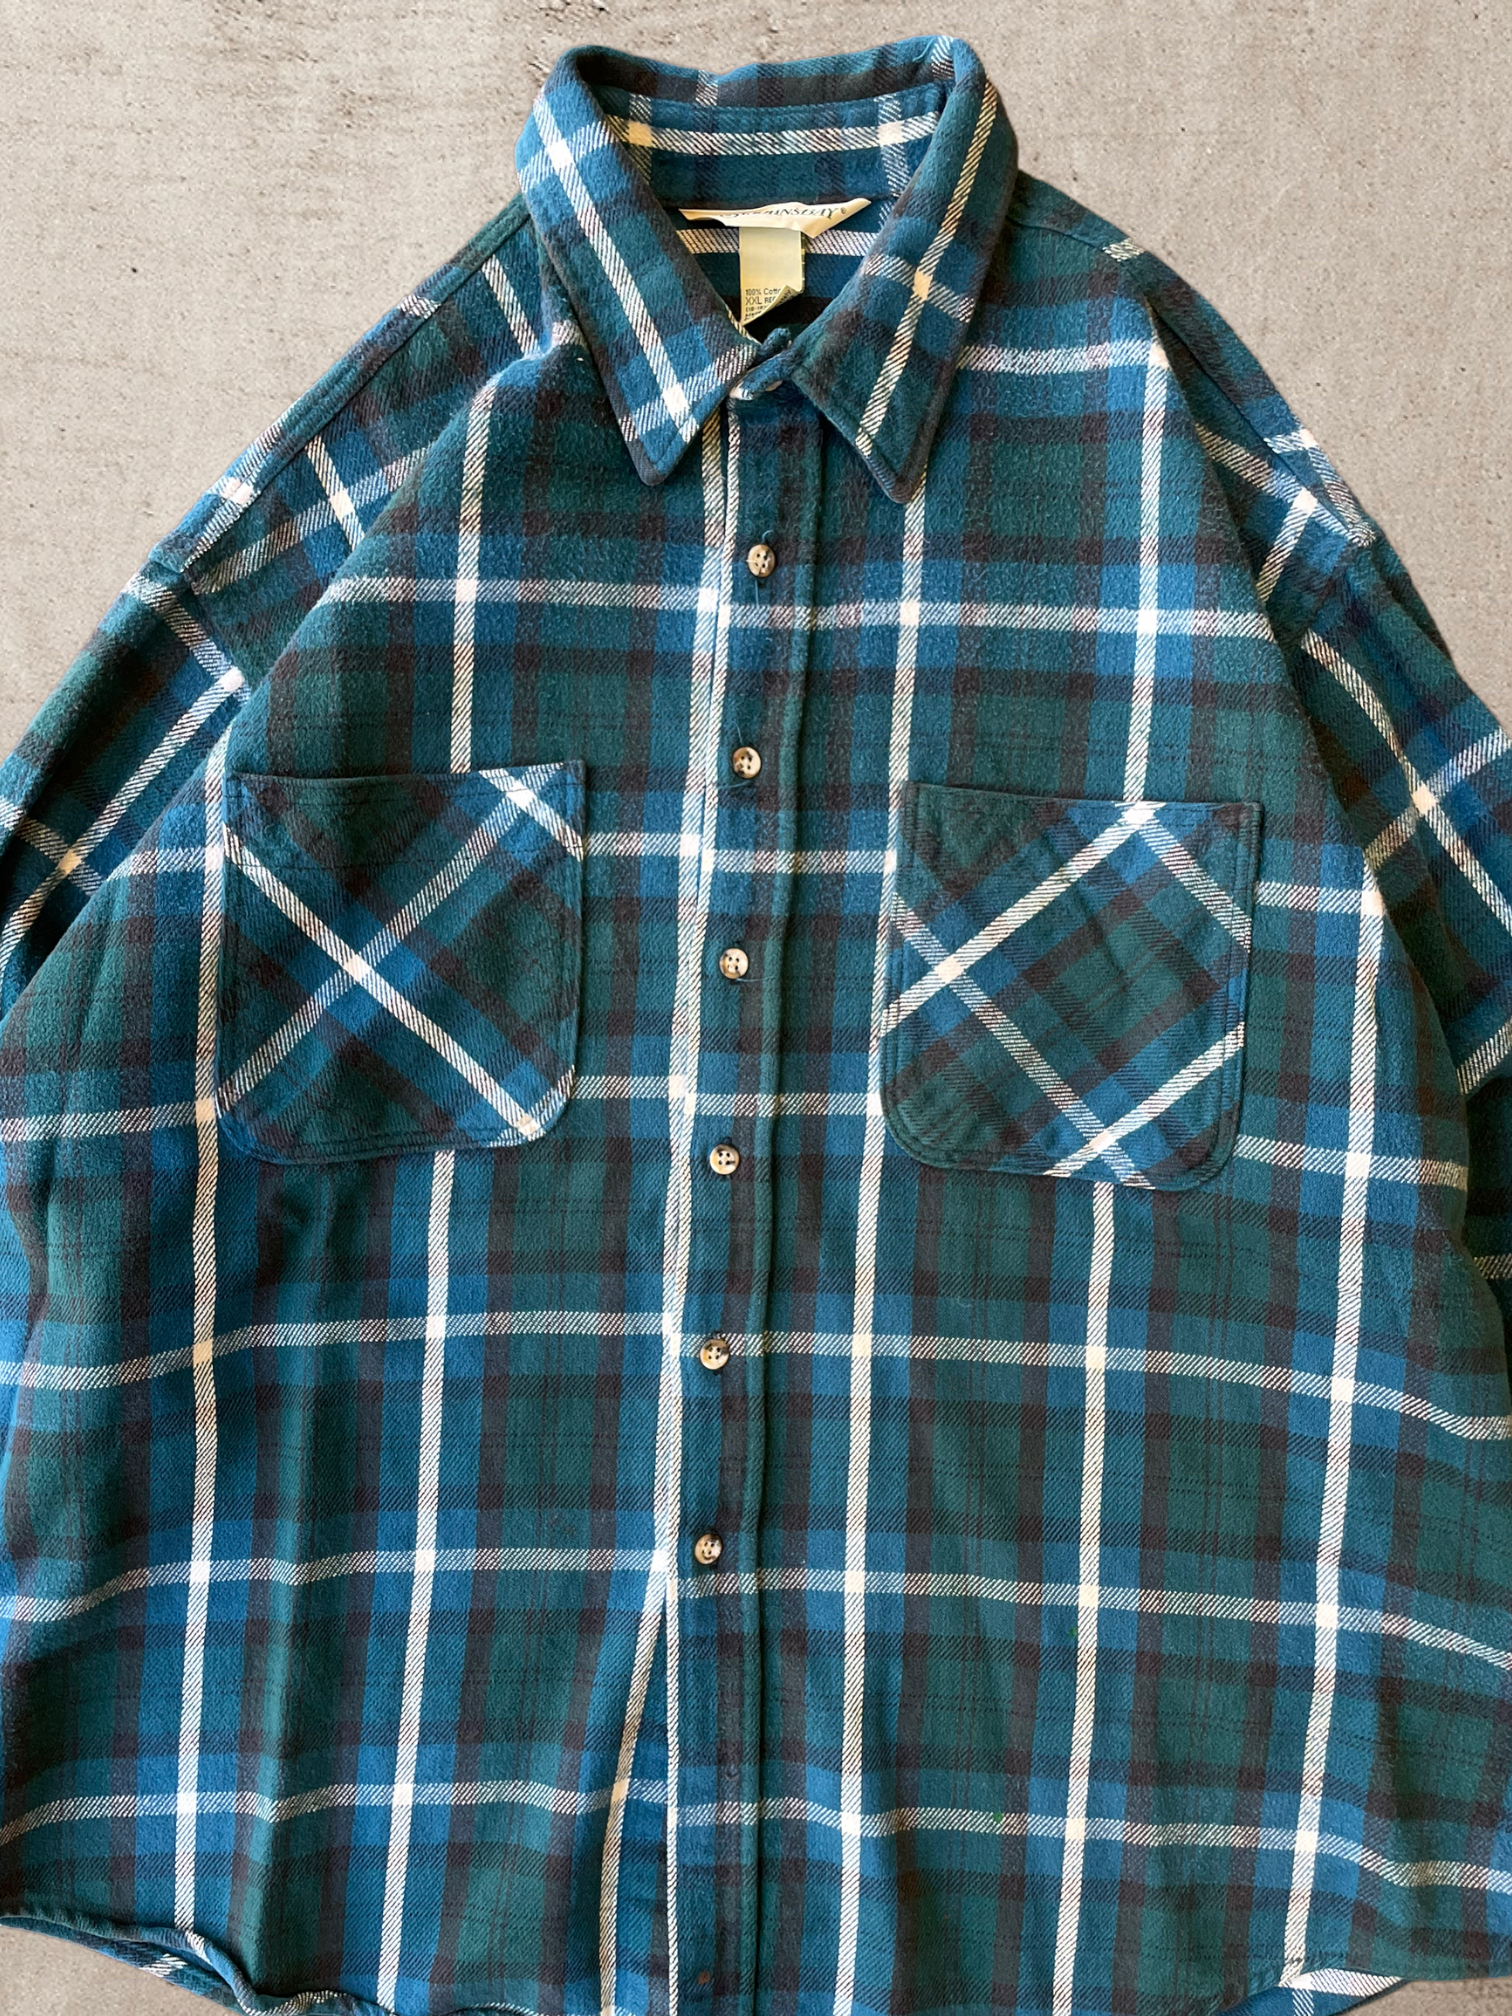 90s Plaid Flannel Button up - X-Large